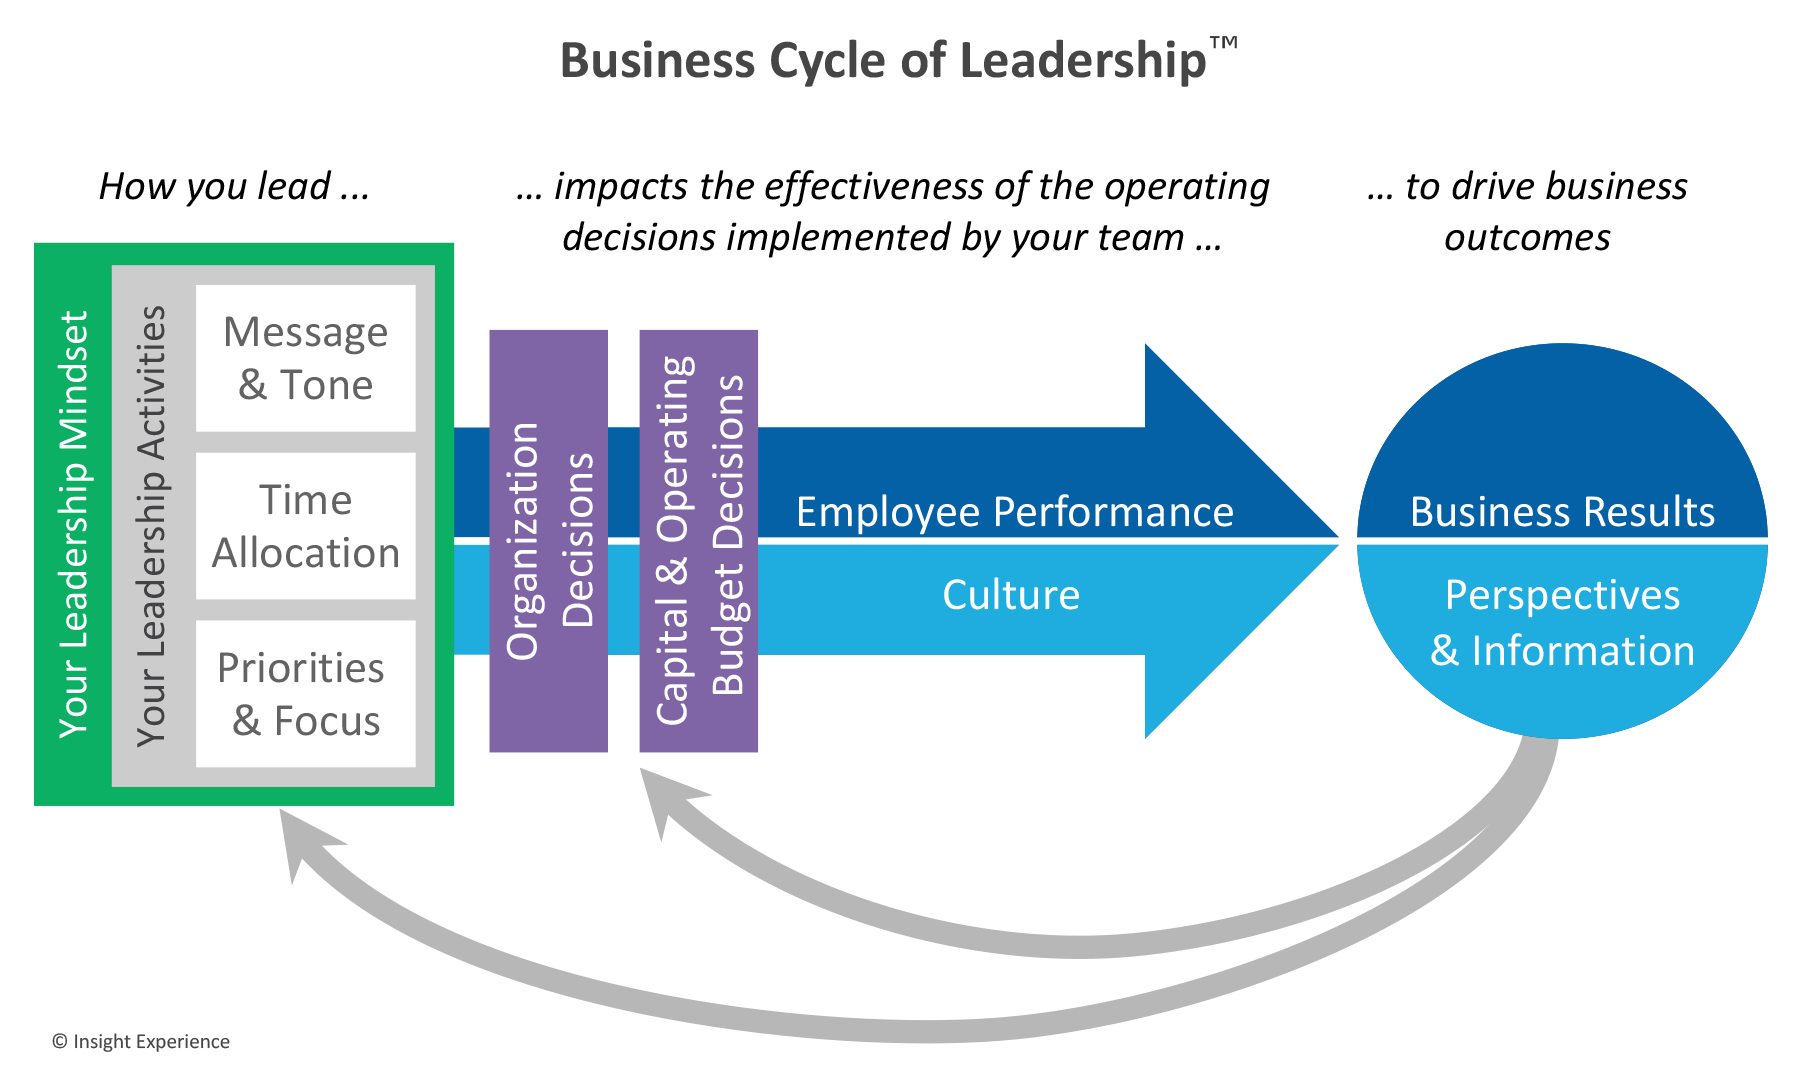 Business Cycle of Leadership in leadership simulations